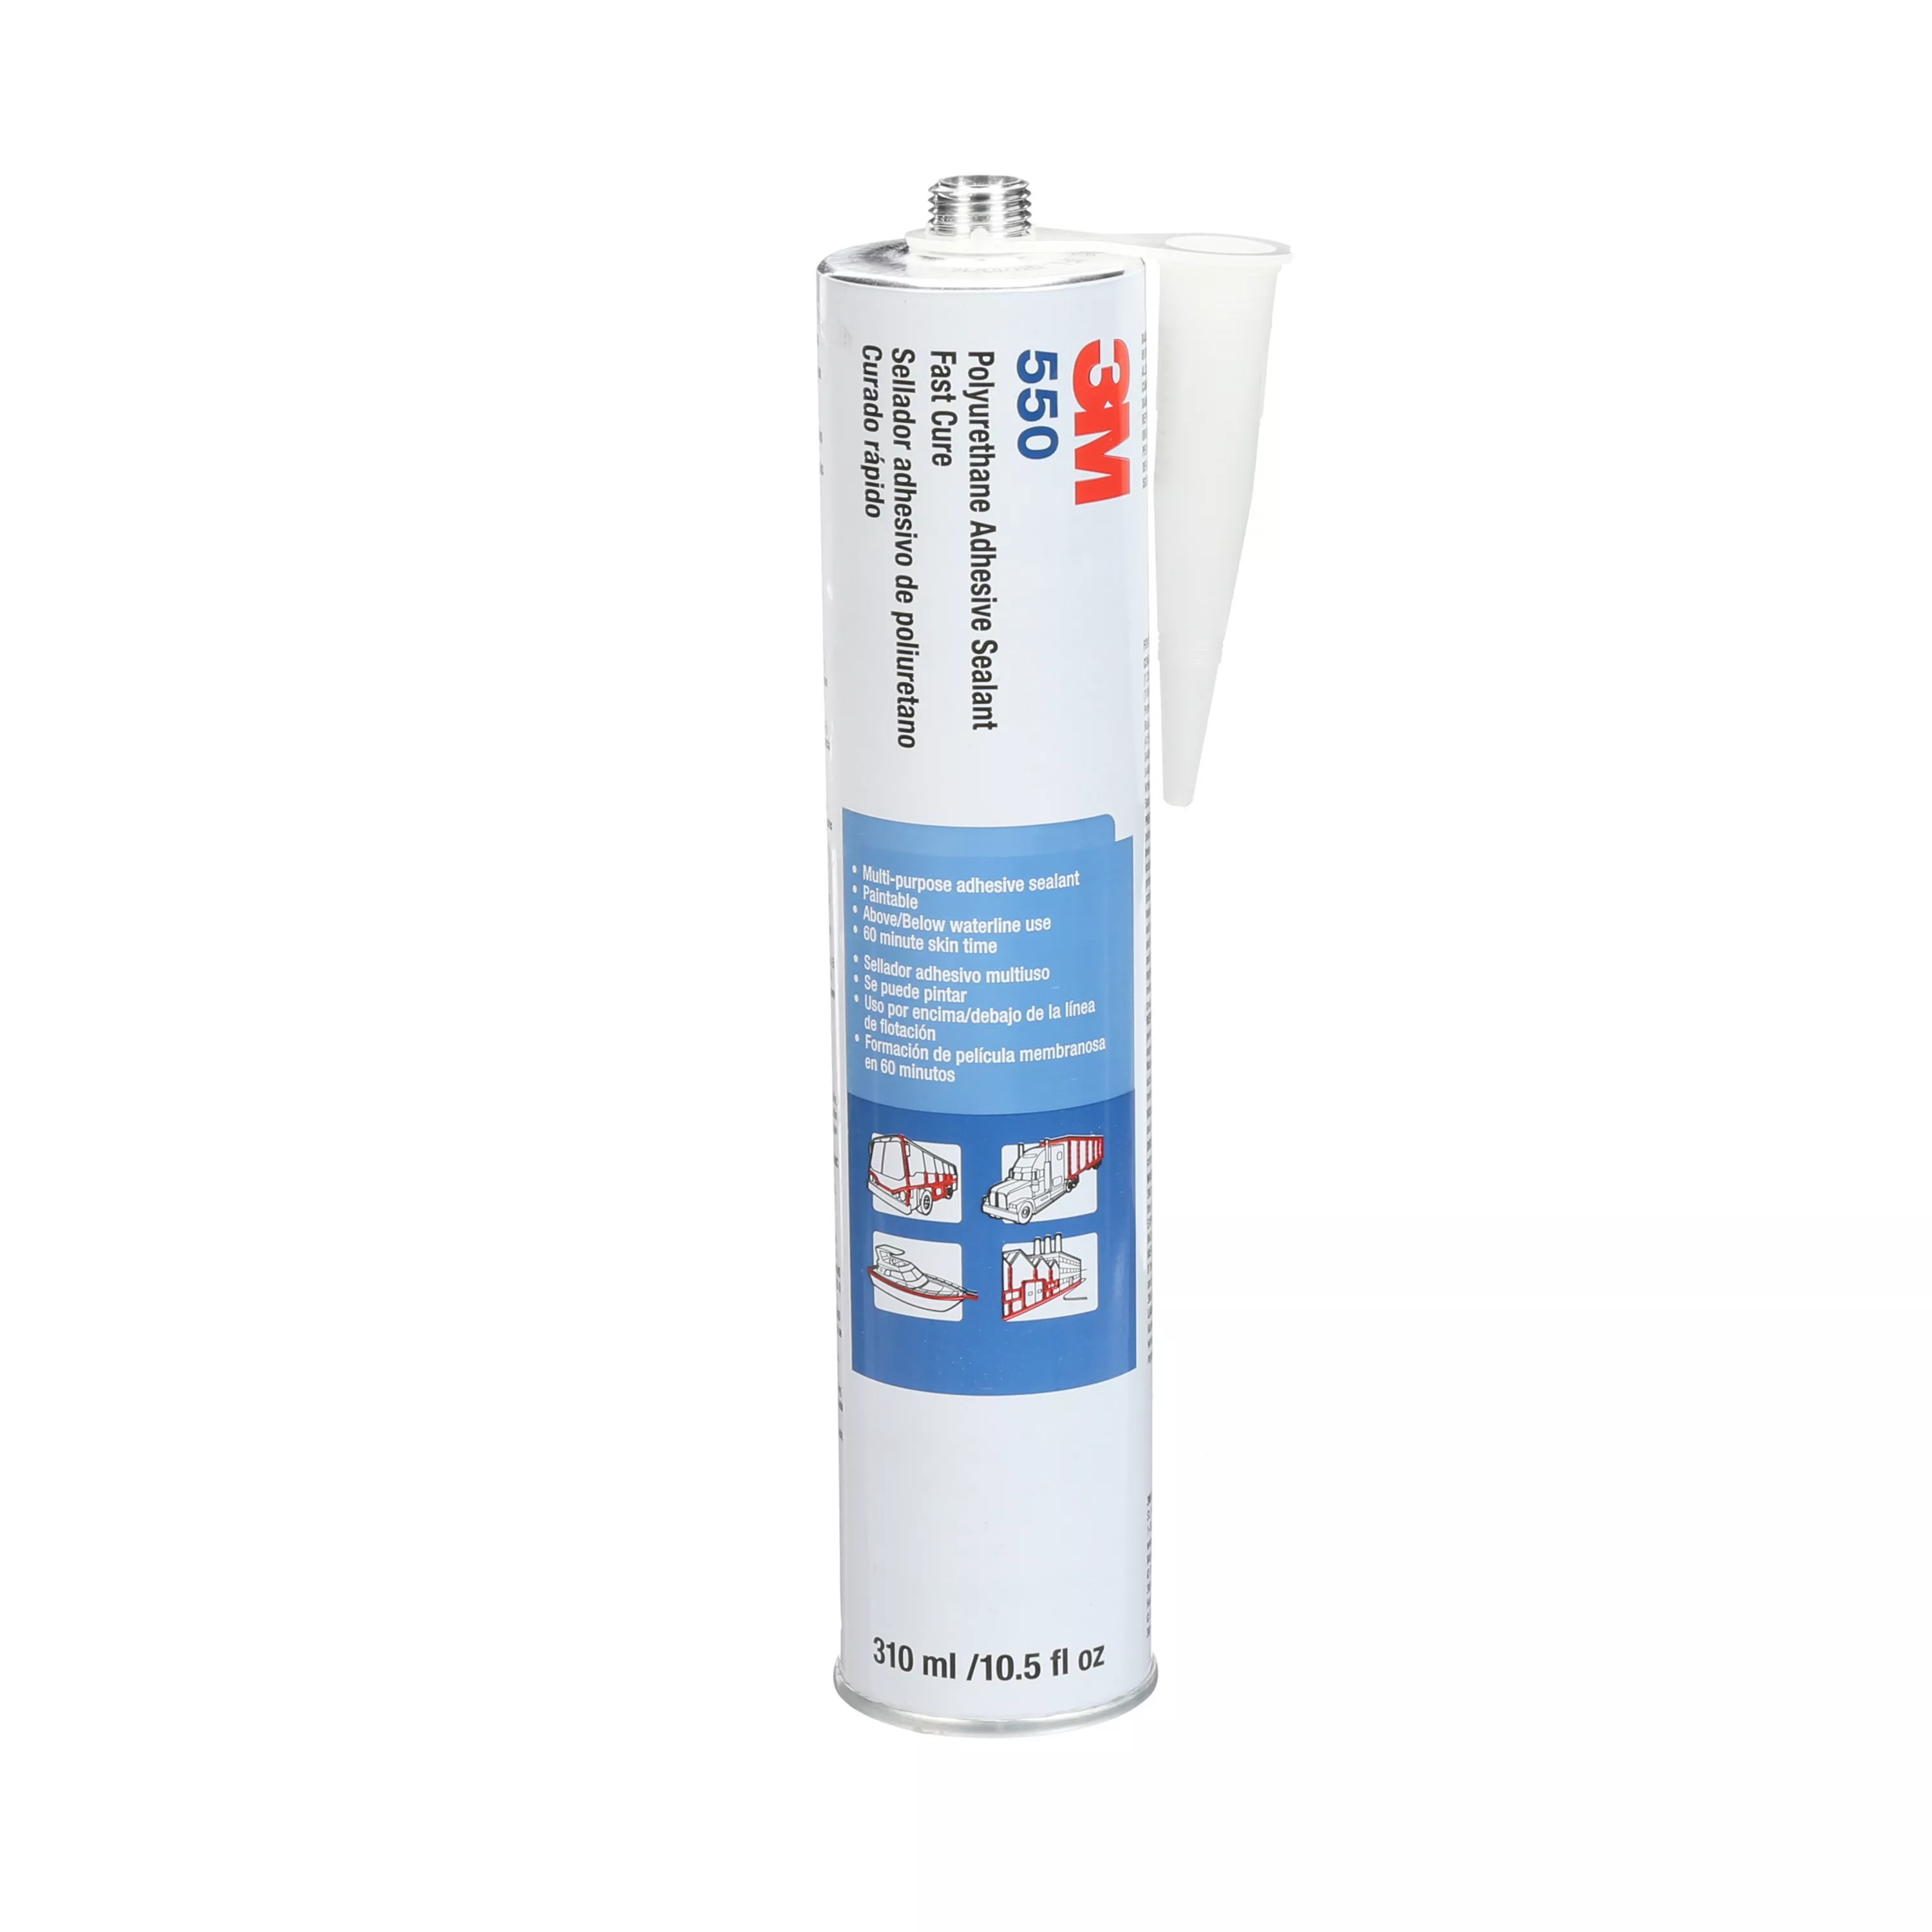 3M™ Polyurethane Adhesive Sealant 550FC Fast Cure, Gray, 310 mL
Cartridge, 12/Case